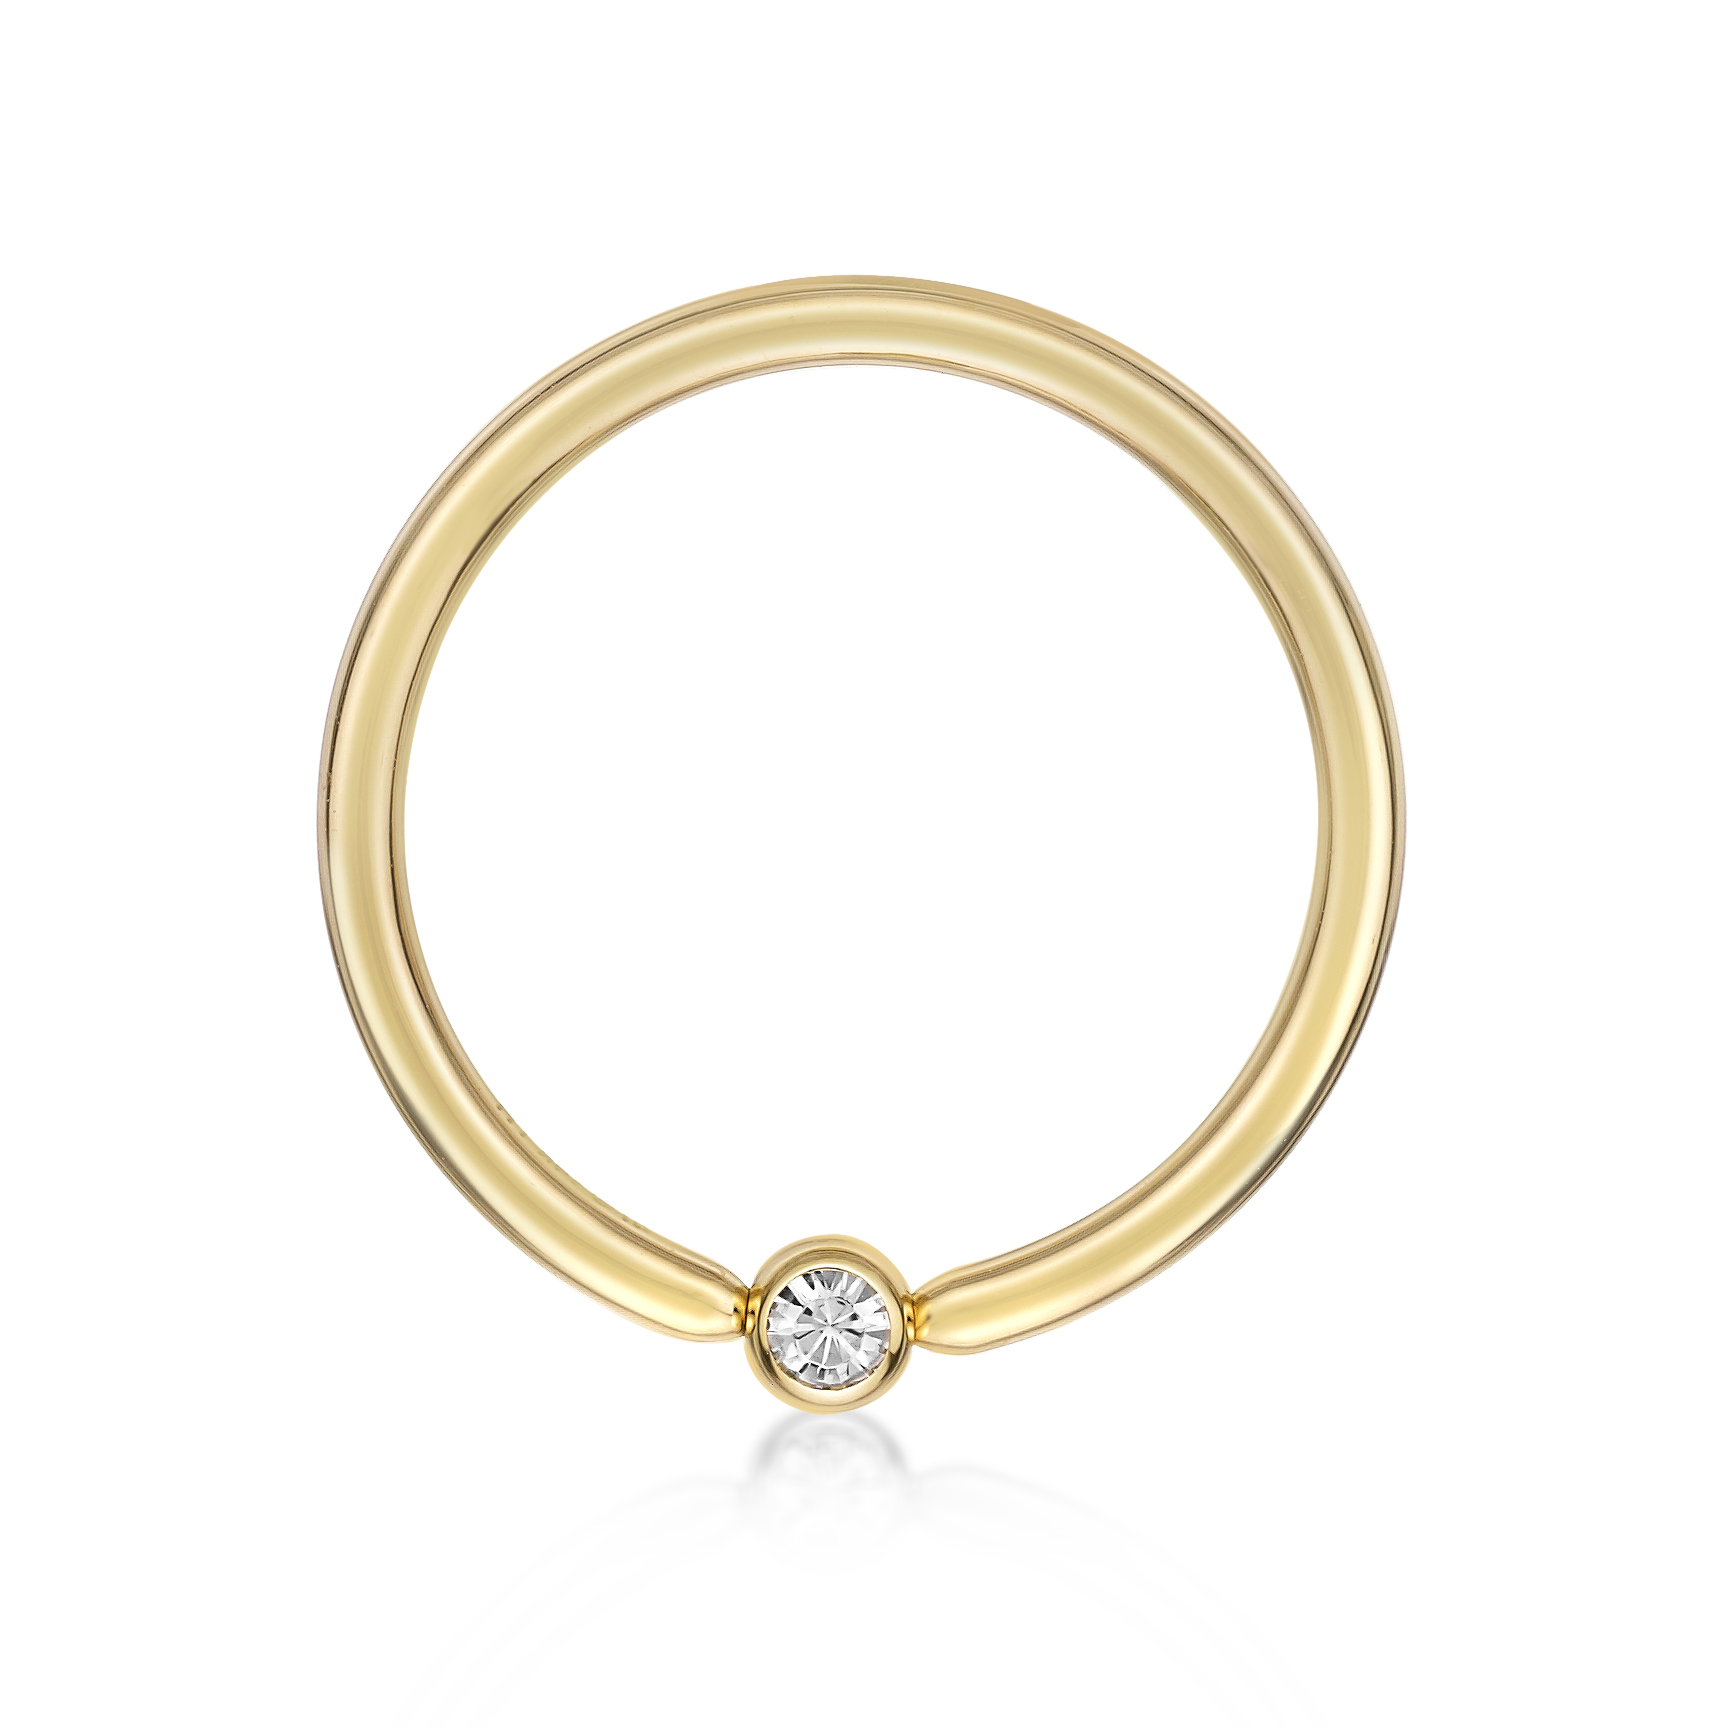 50109-nipple-ring-the-piercer-yellow-gold-swarovski-crystal-50109-5.jpg